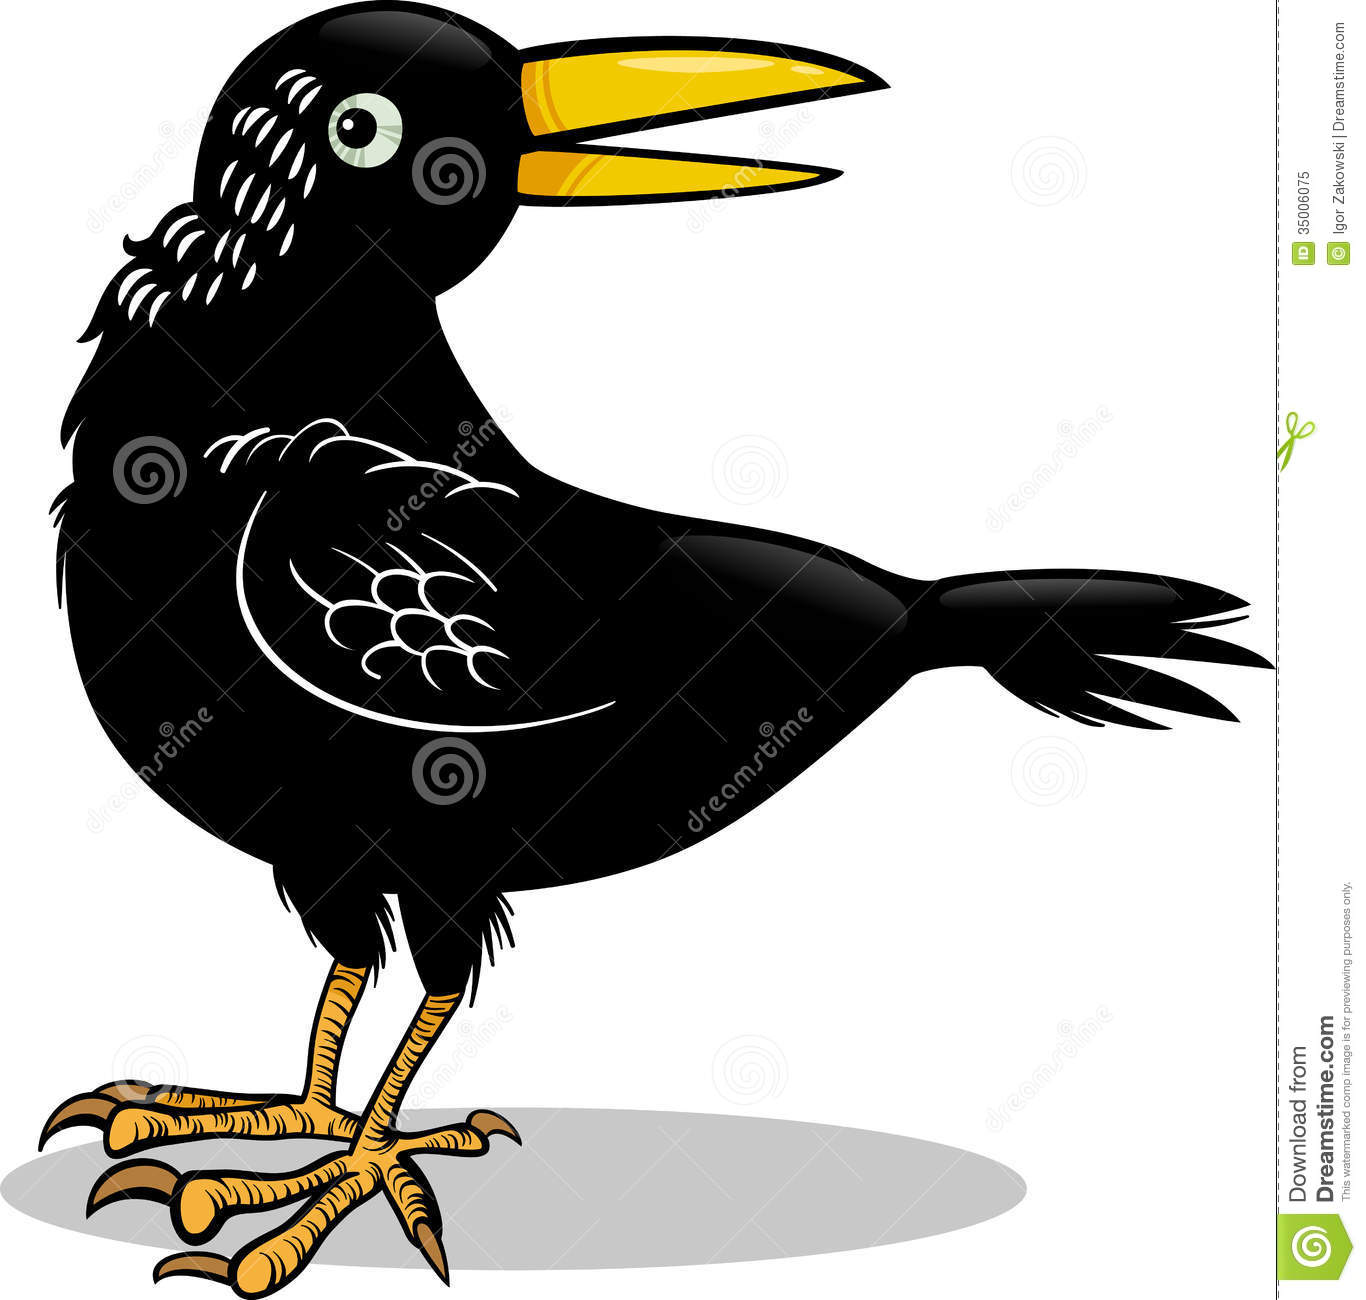 Crow Or Raven Bird Cartoon Illustration Royalty Free Stock Photo